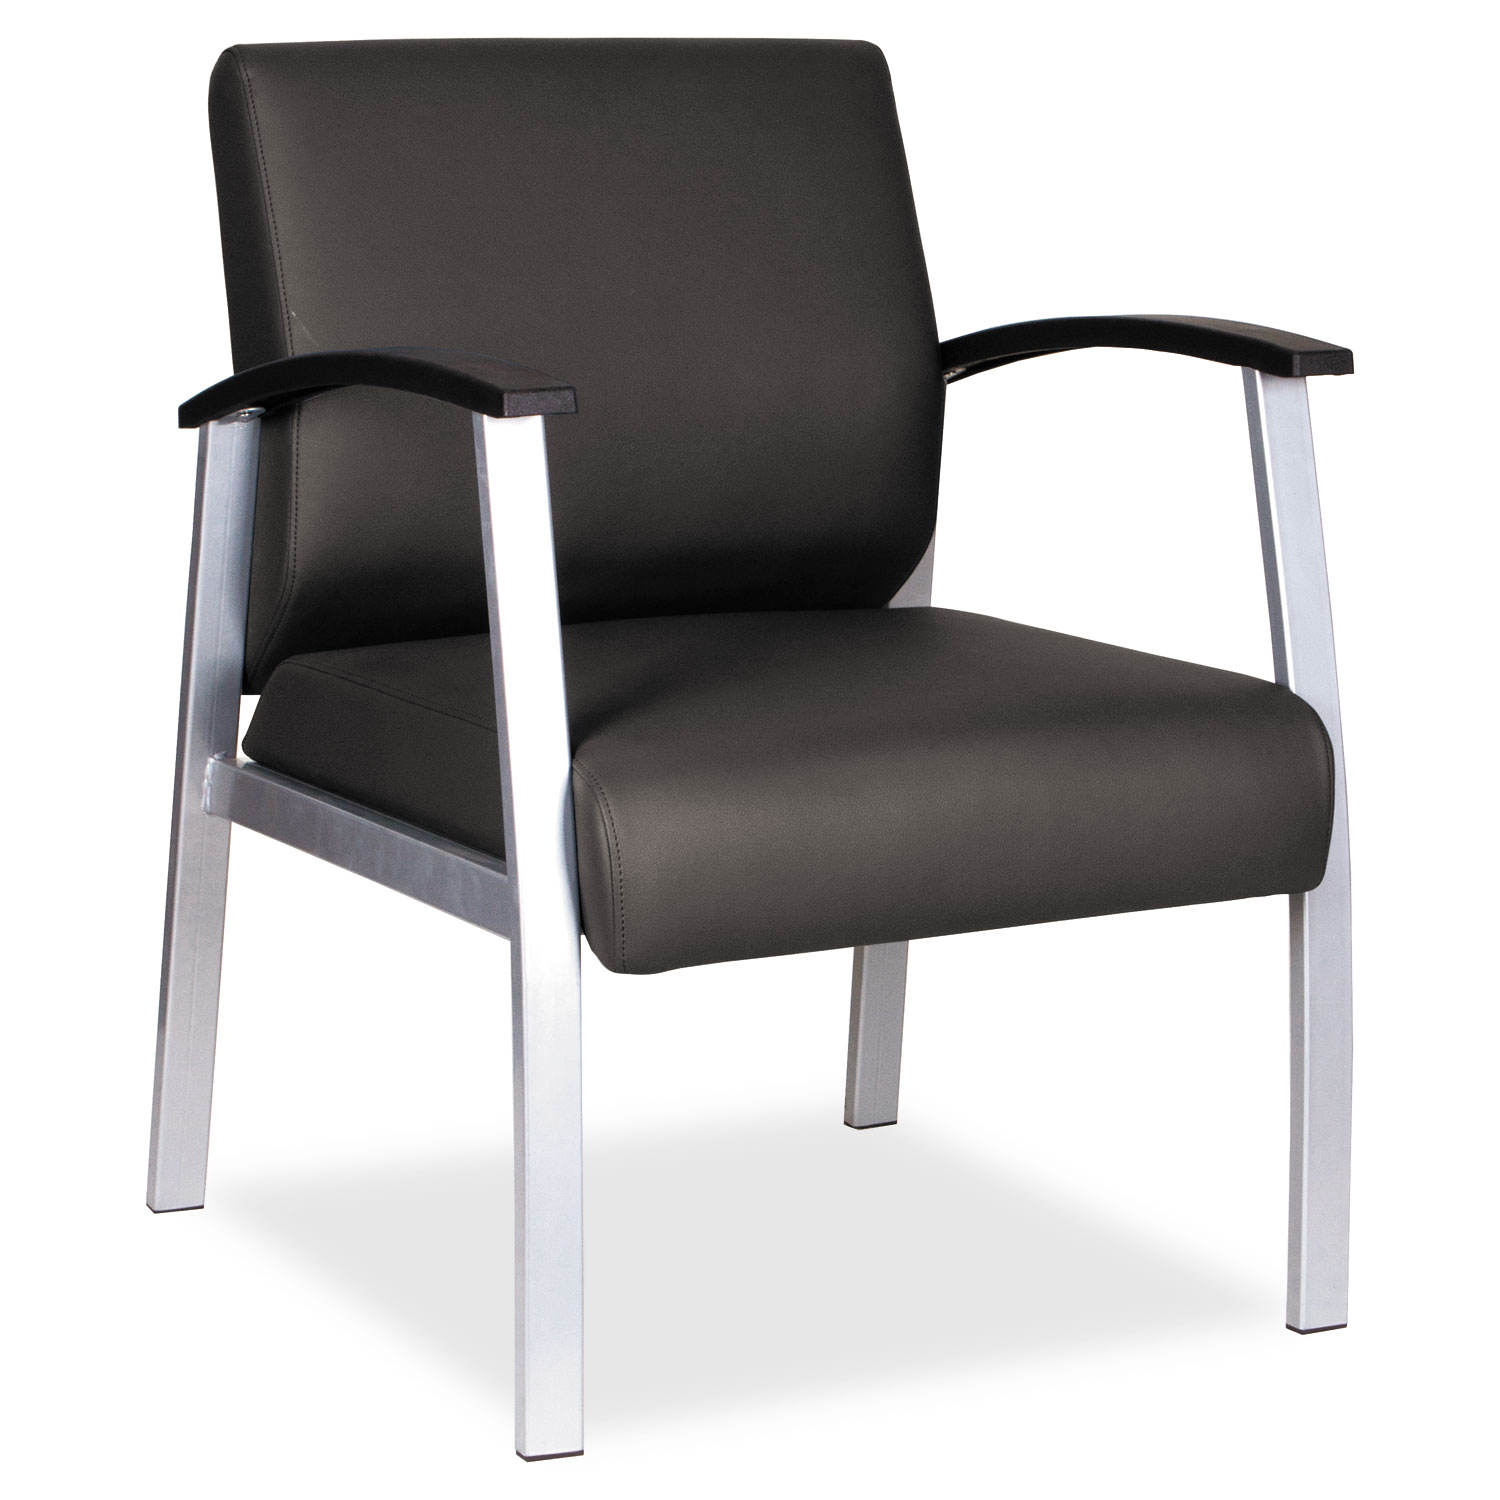  Alera ALEML2319 Alera metaLounge Series Mid-Back Guest Chair, 24.60'' x 26.96'' x 33.46'', Black Seat/Black Back, Silver Base (ALEML2319) 